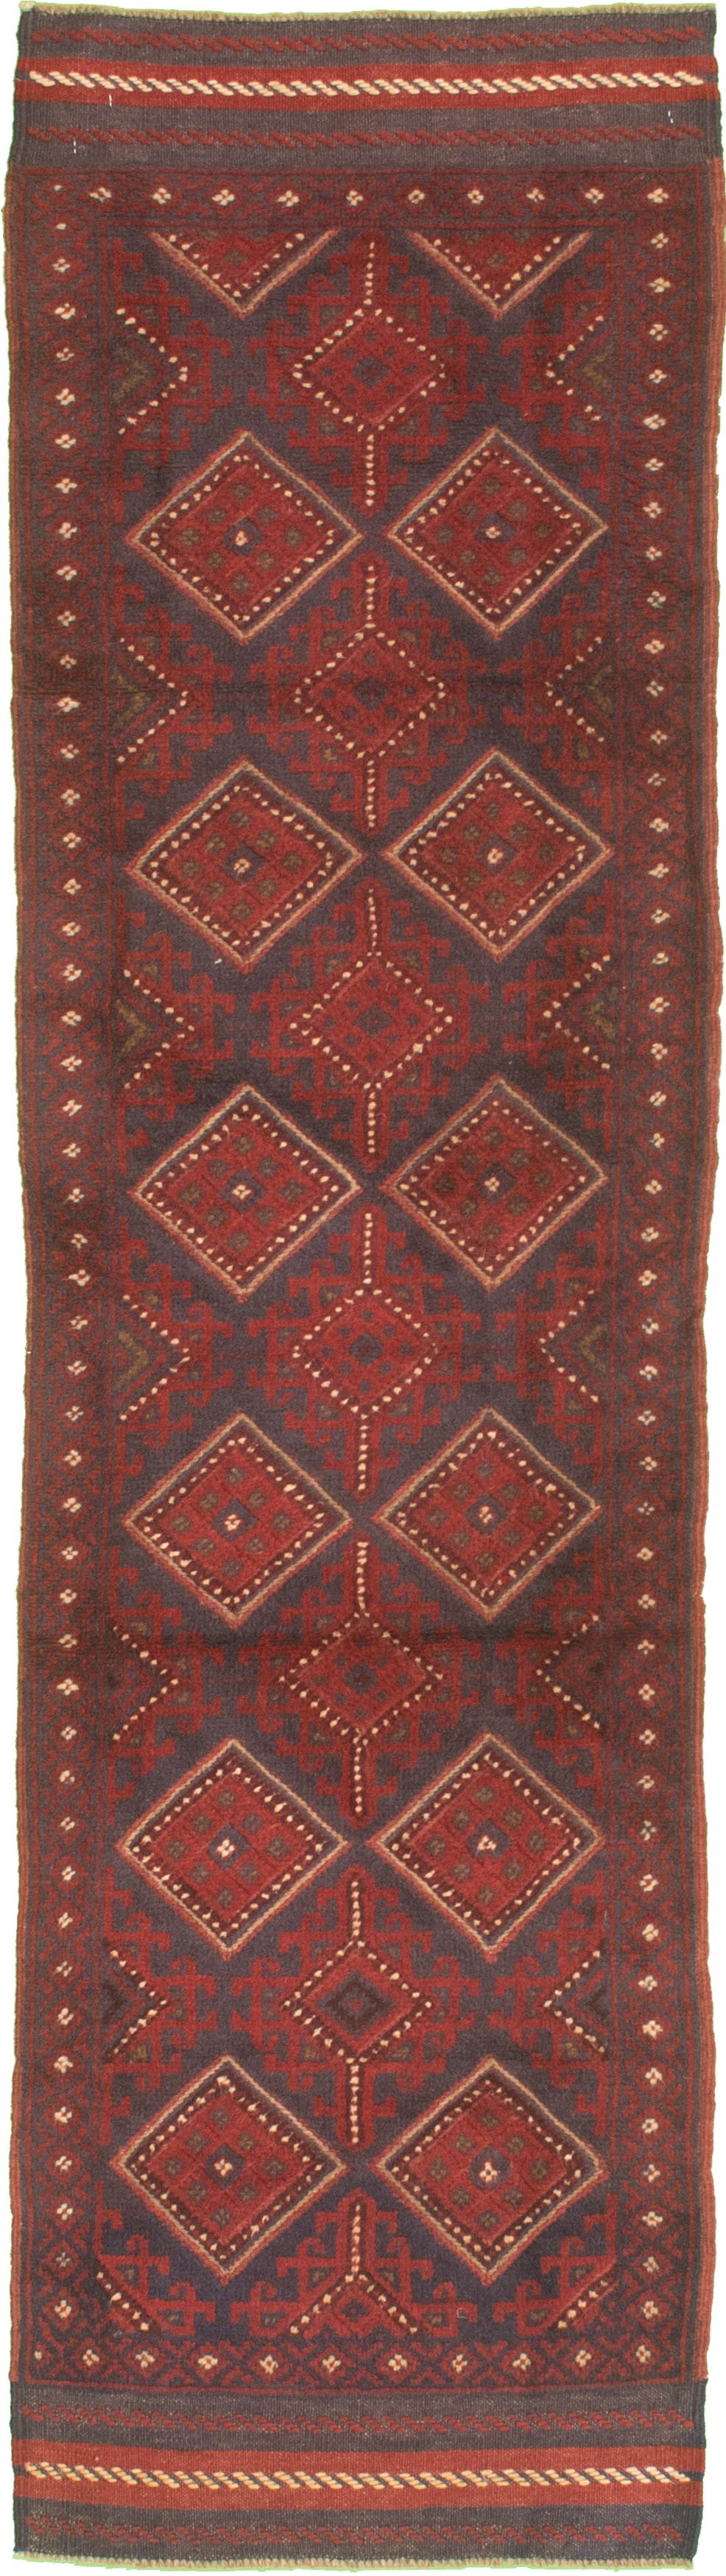 Hand-knotted Tajik Caucasian Red Wool Rug 2'0" x 8'3" (22) Size: 2'0" x 8'3"  